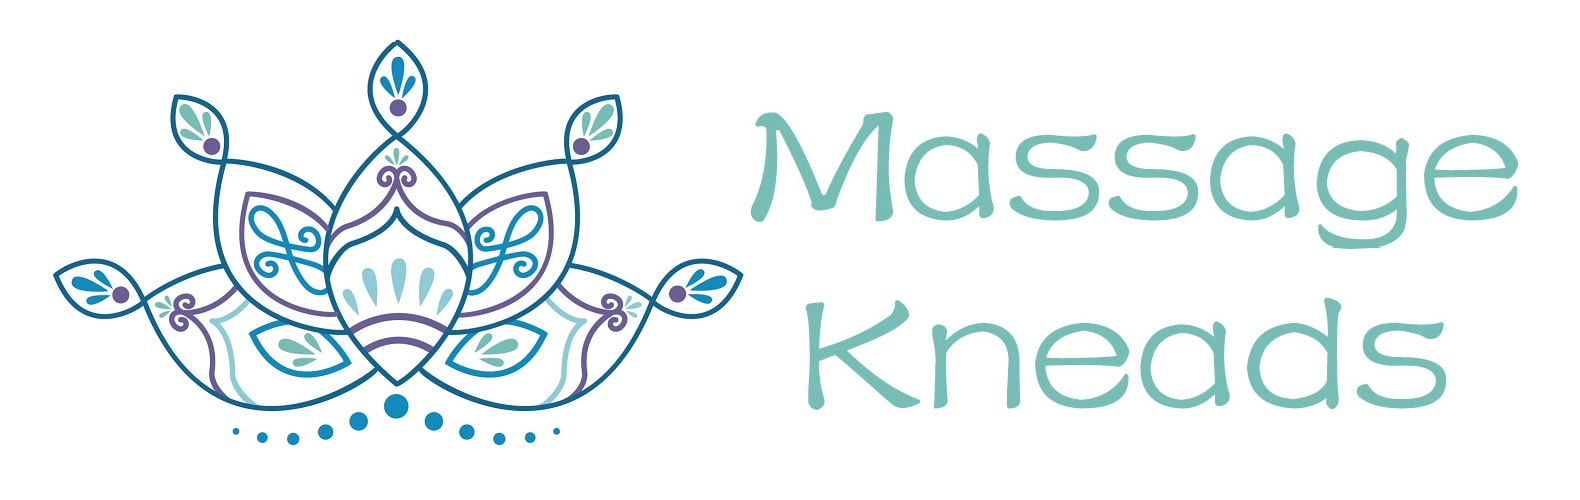 Massage Kneads logo